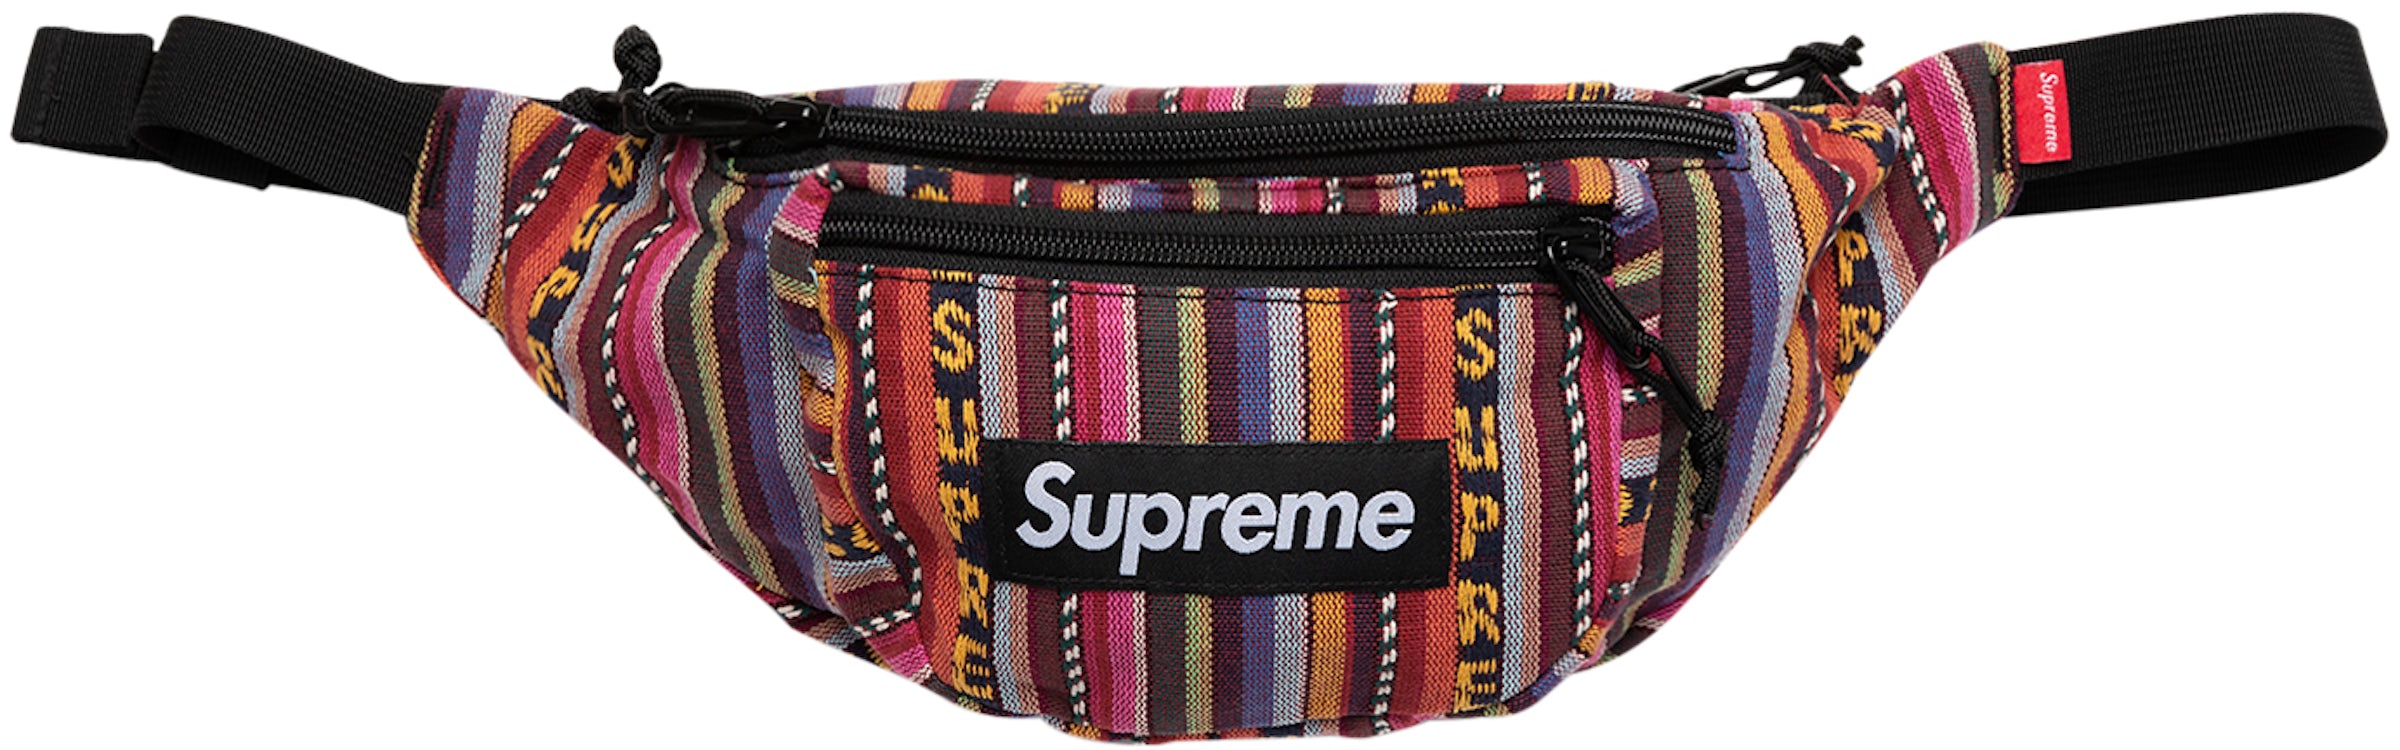 Ss20+Supreme+Waist+Bag+Black+100+Authentic for sale online